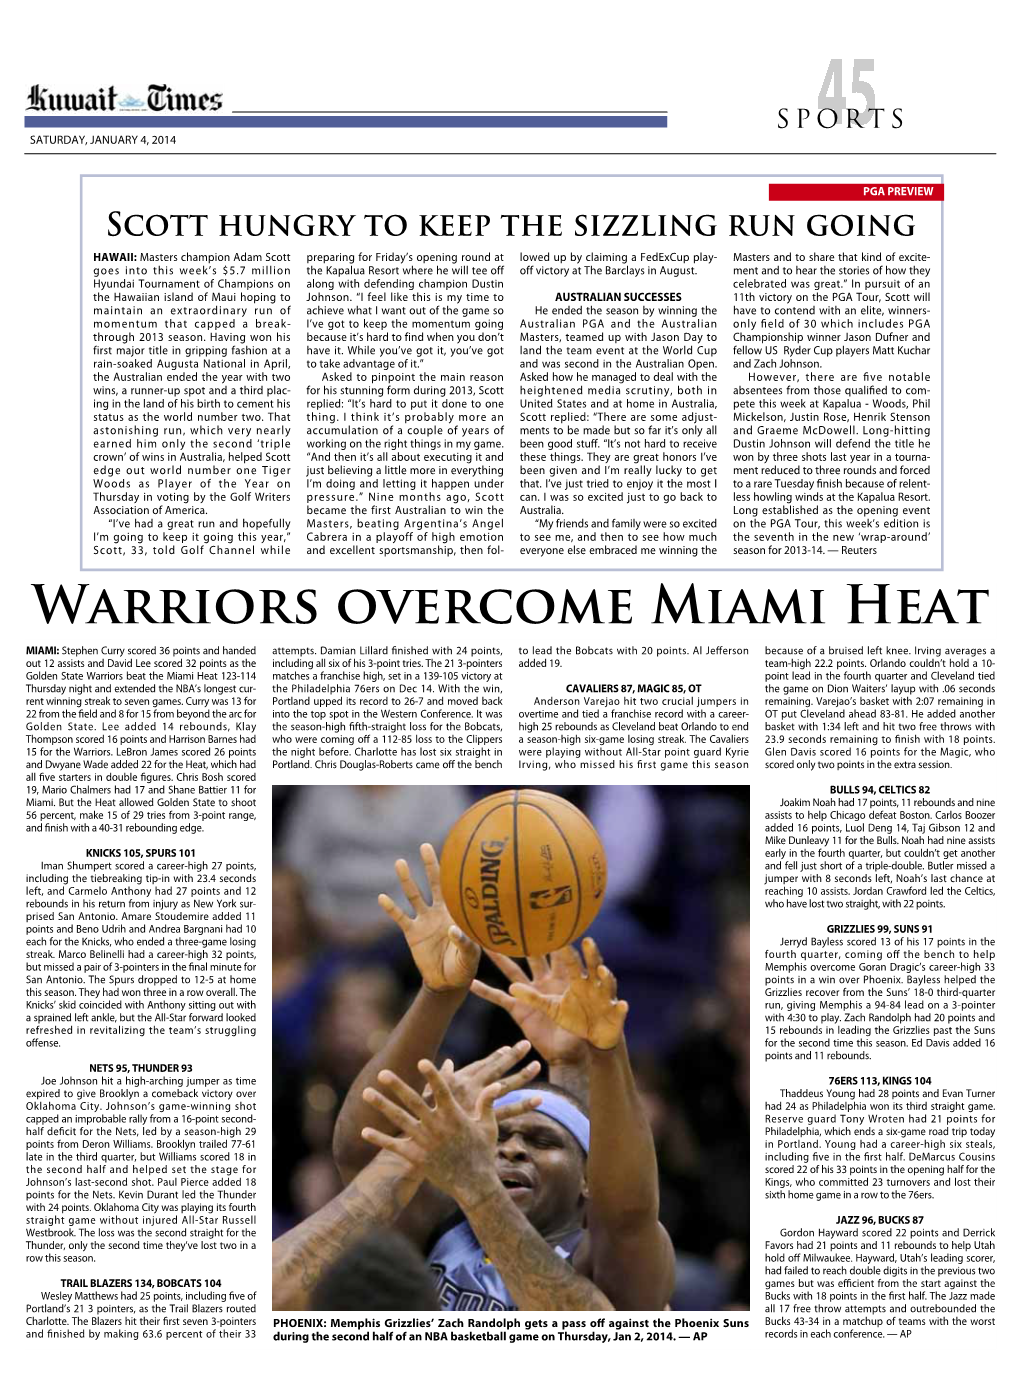 Warriors Overcome Miami Heat